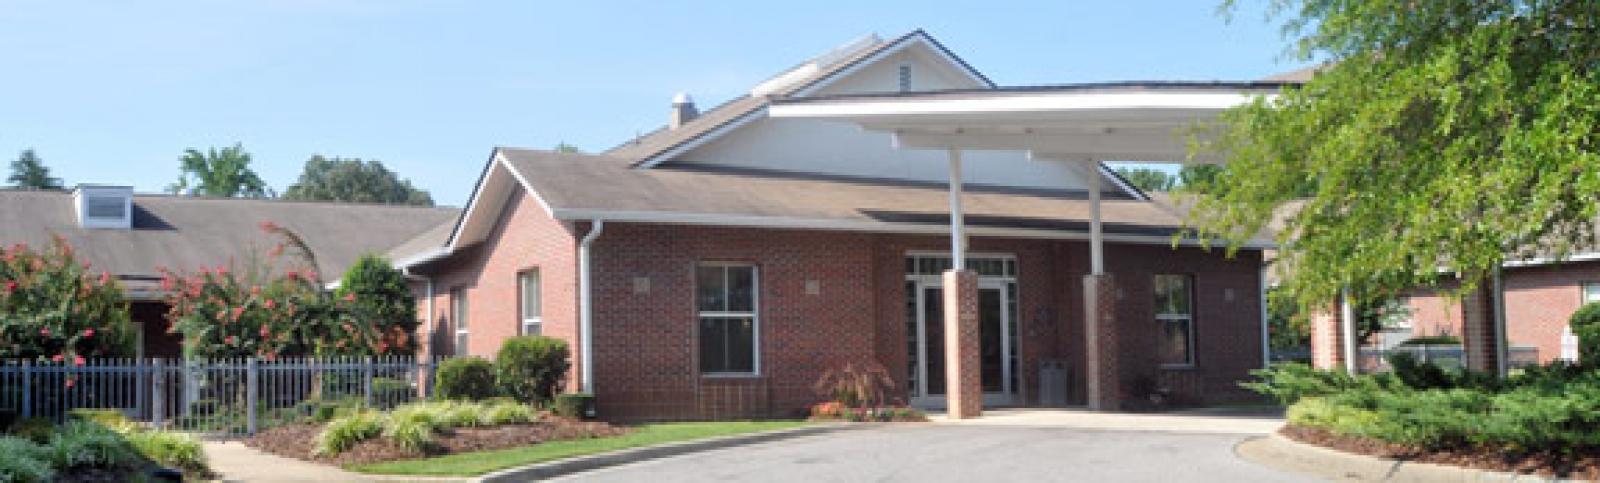 Cherry Hill Rehabilitation & HealthCare Center Birmingham, Alabama